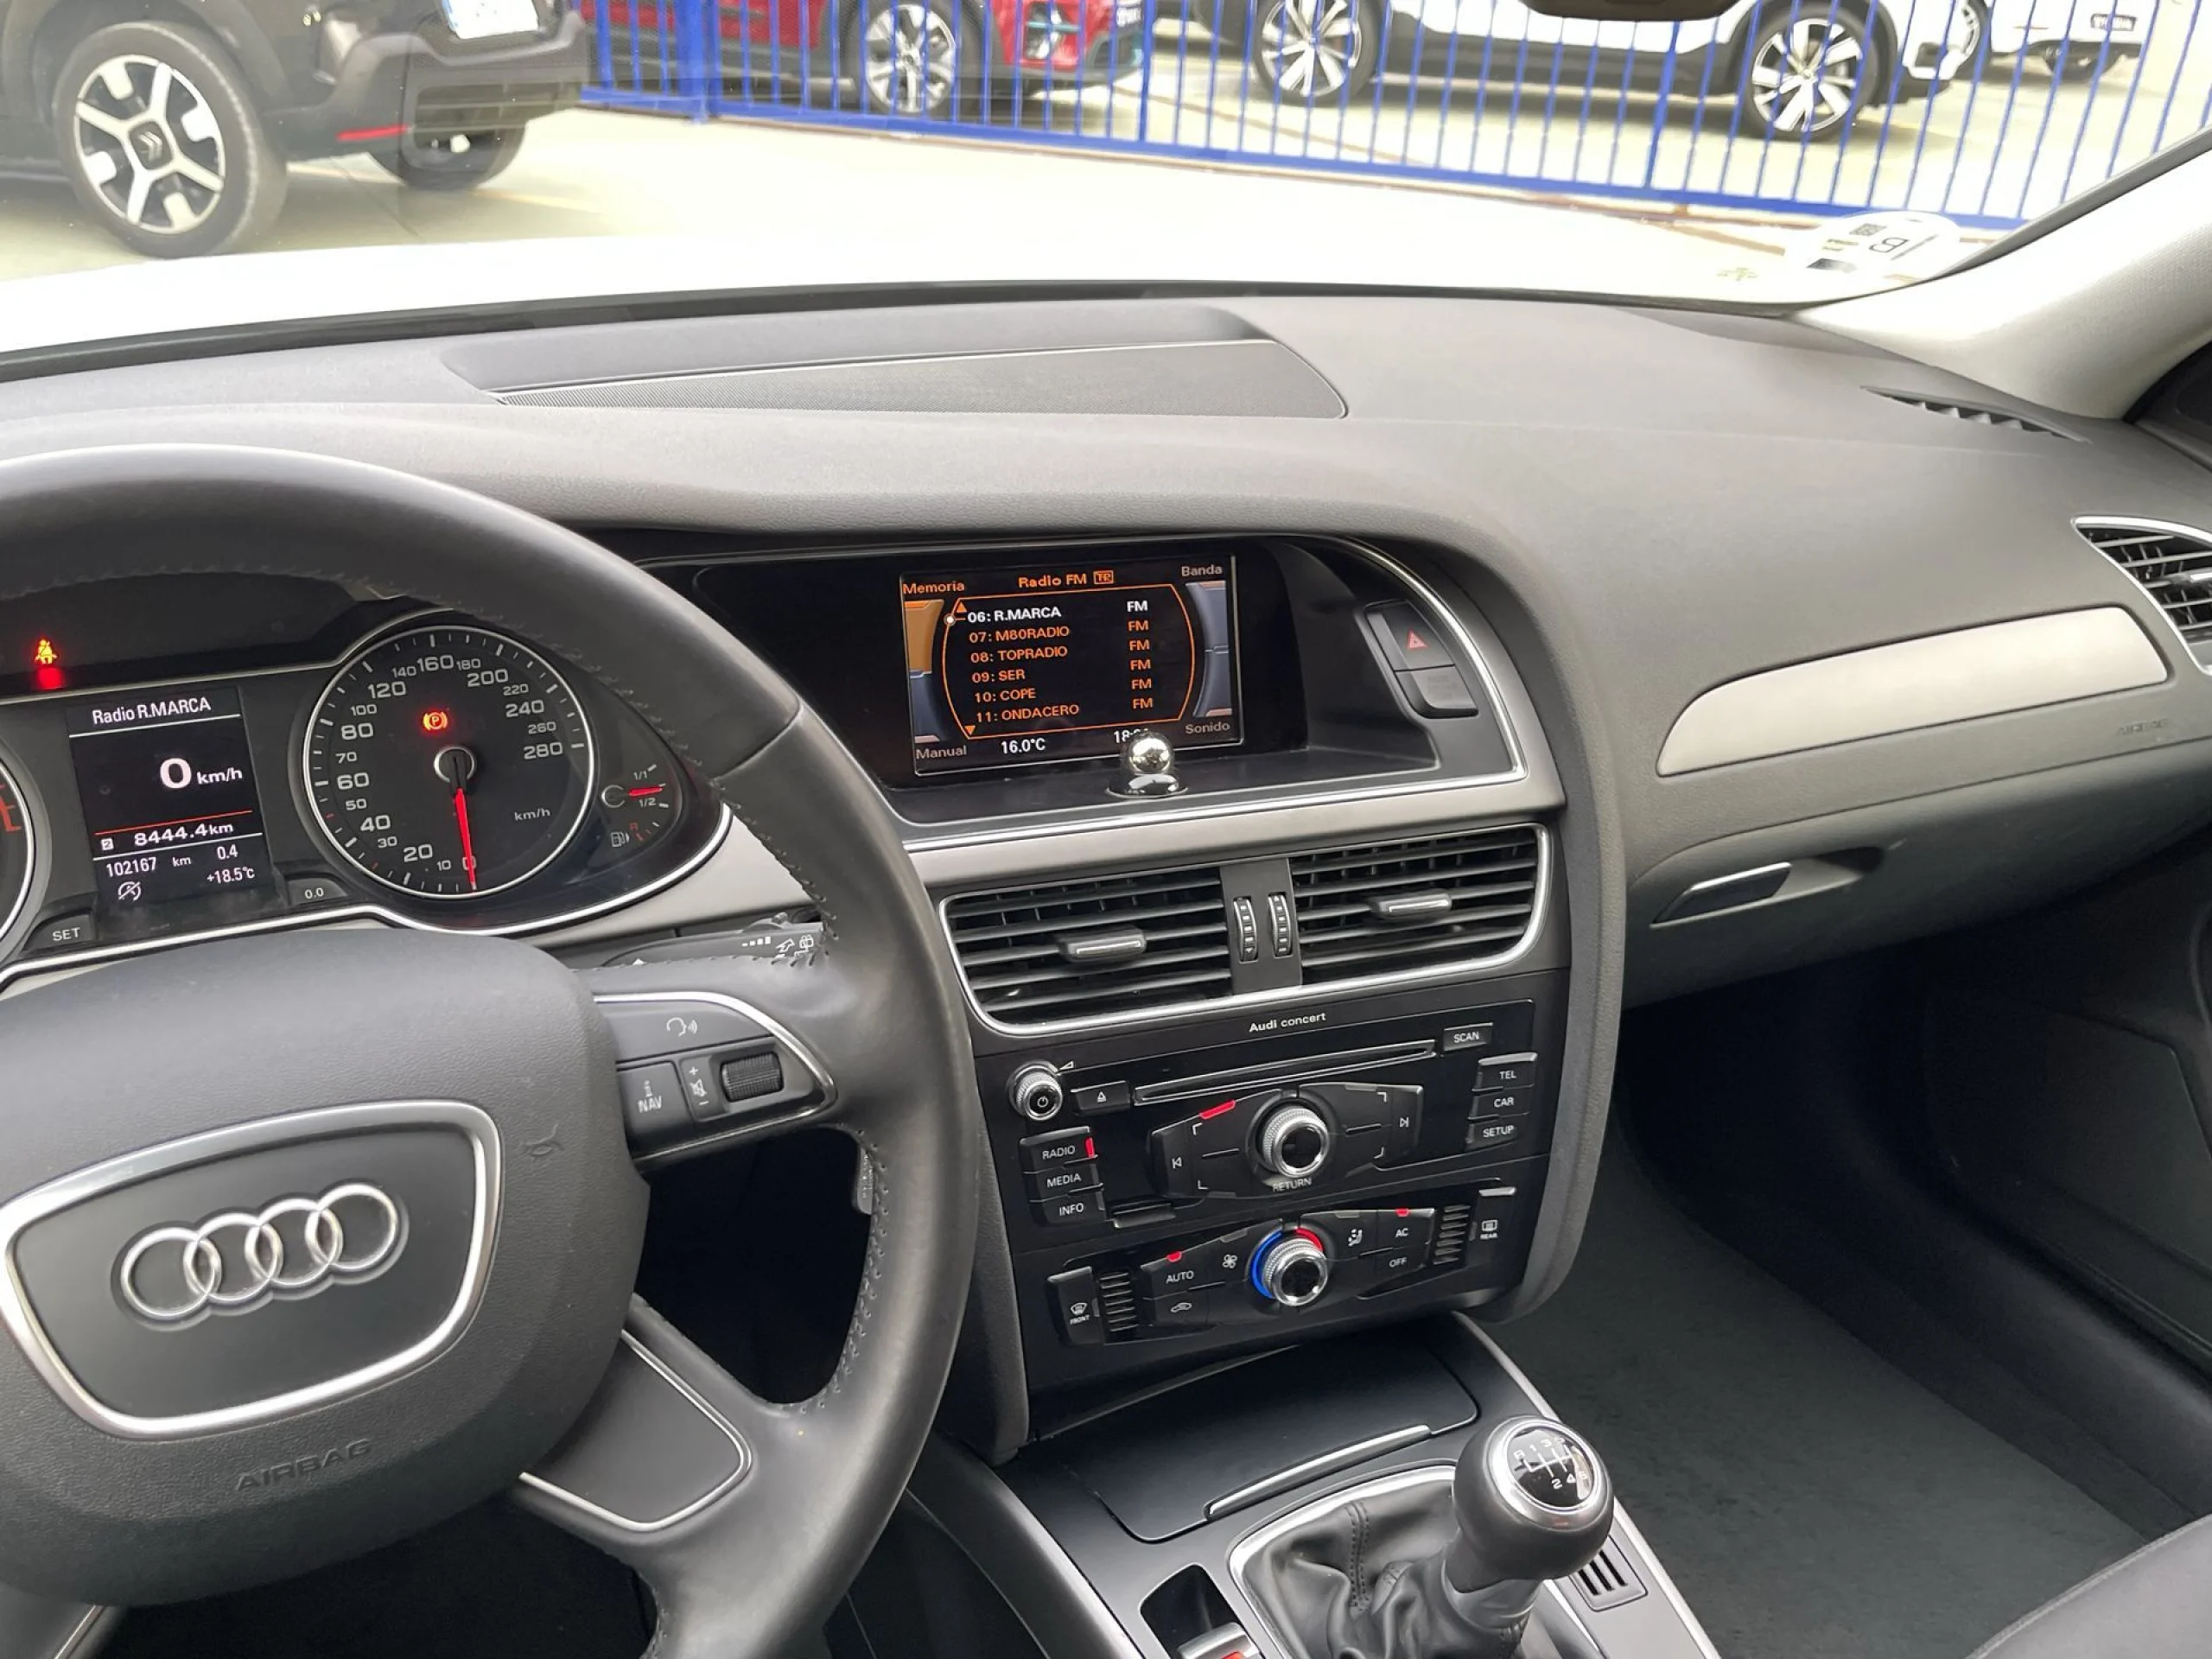 Audi A4 Avant 2.0 TDI 100 kW (136 CV) - Foto 15